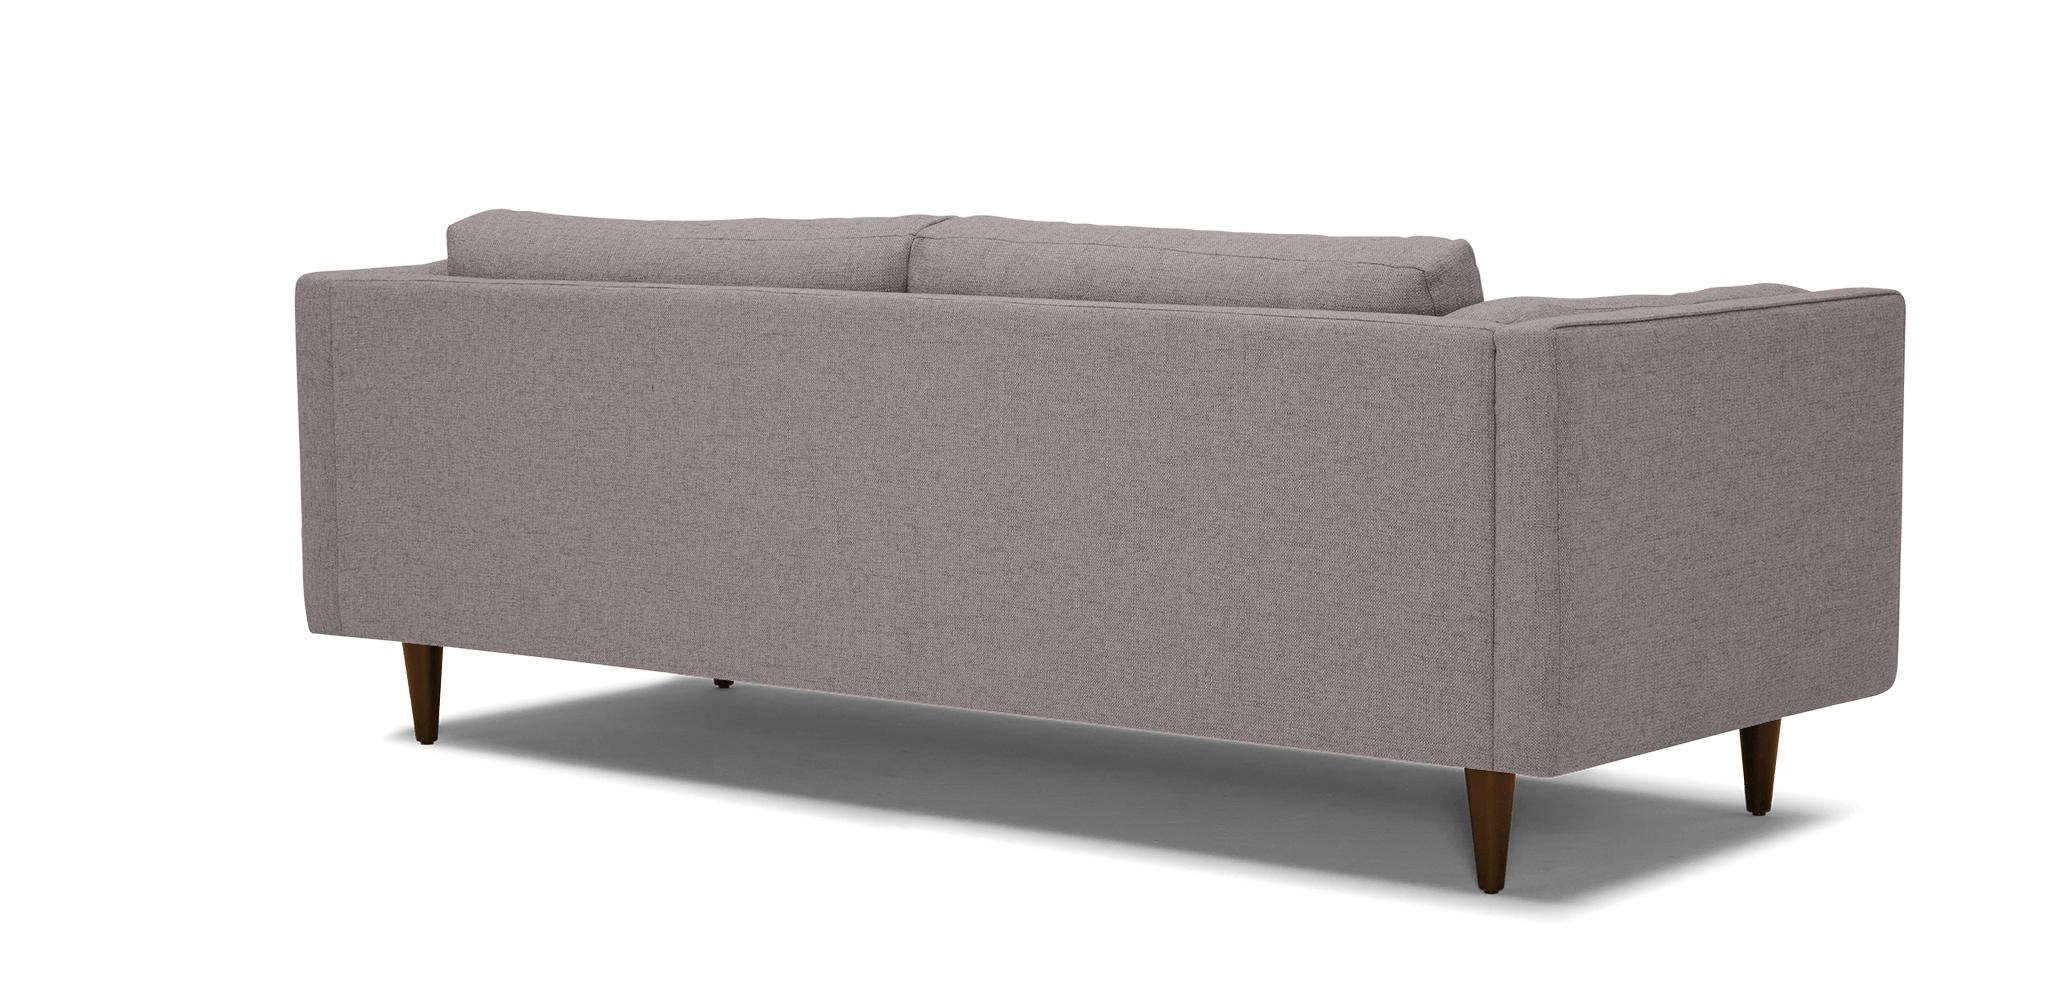 Purple Parker Mid Century Modern Sofa - Sunbrella Premier Wisteria - Mocha - Image 3